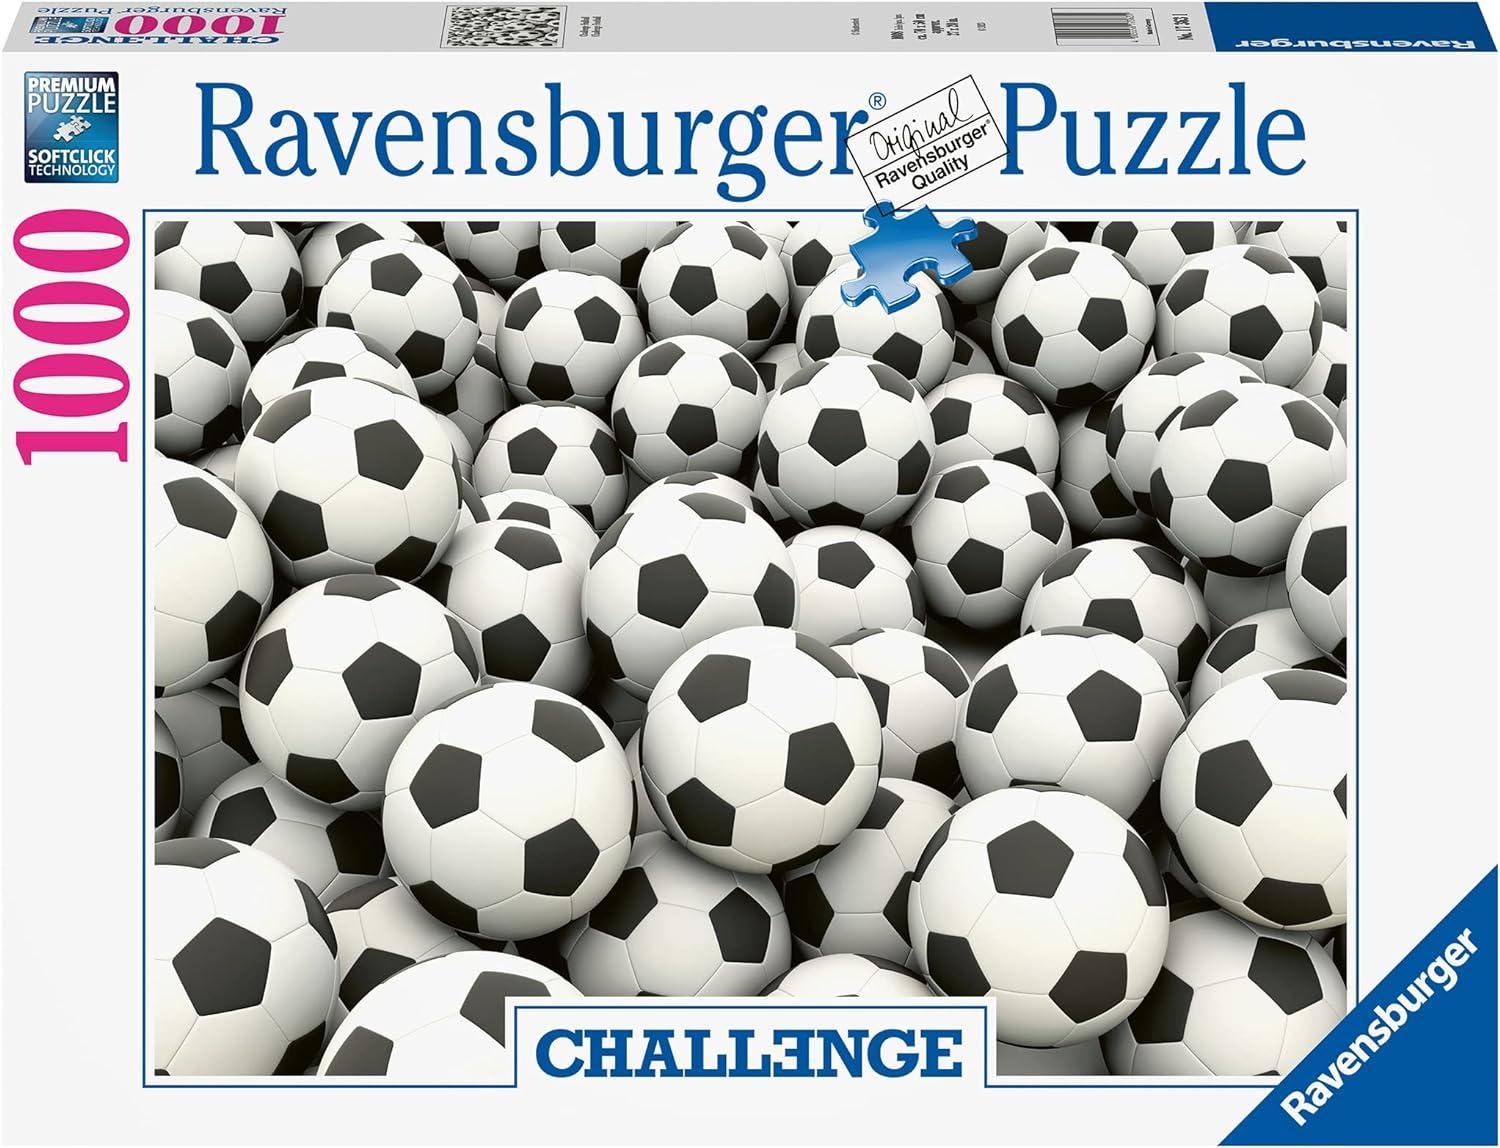 Ravensburger Puzzle - Challenge: Fußball - 1000 Teile